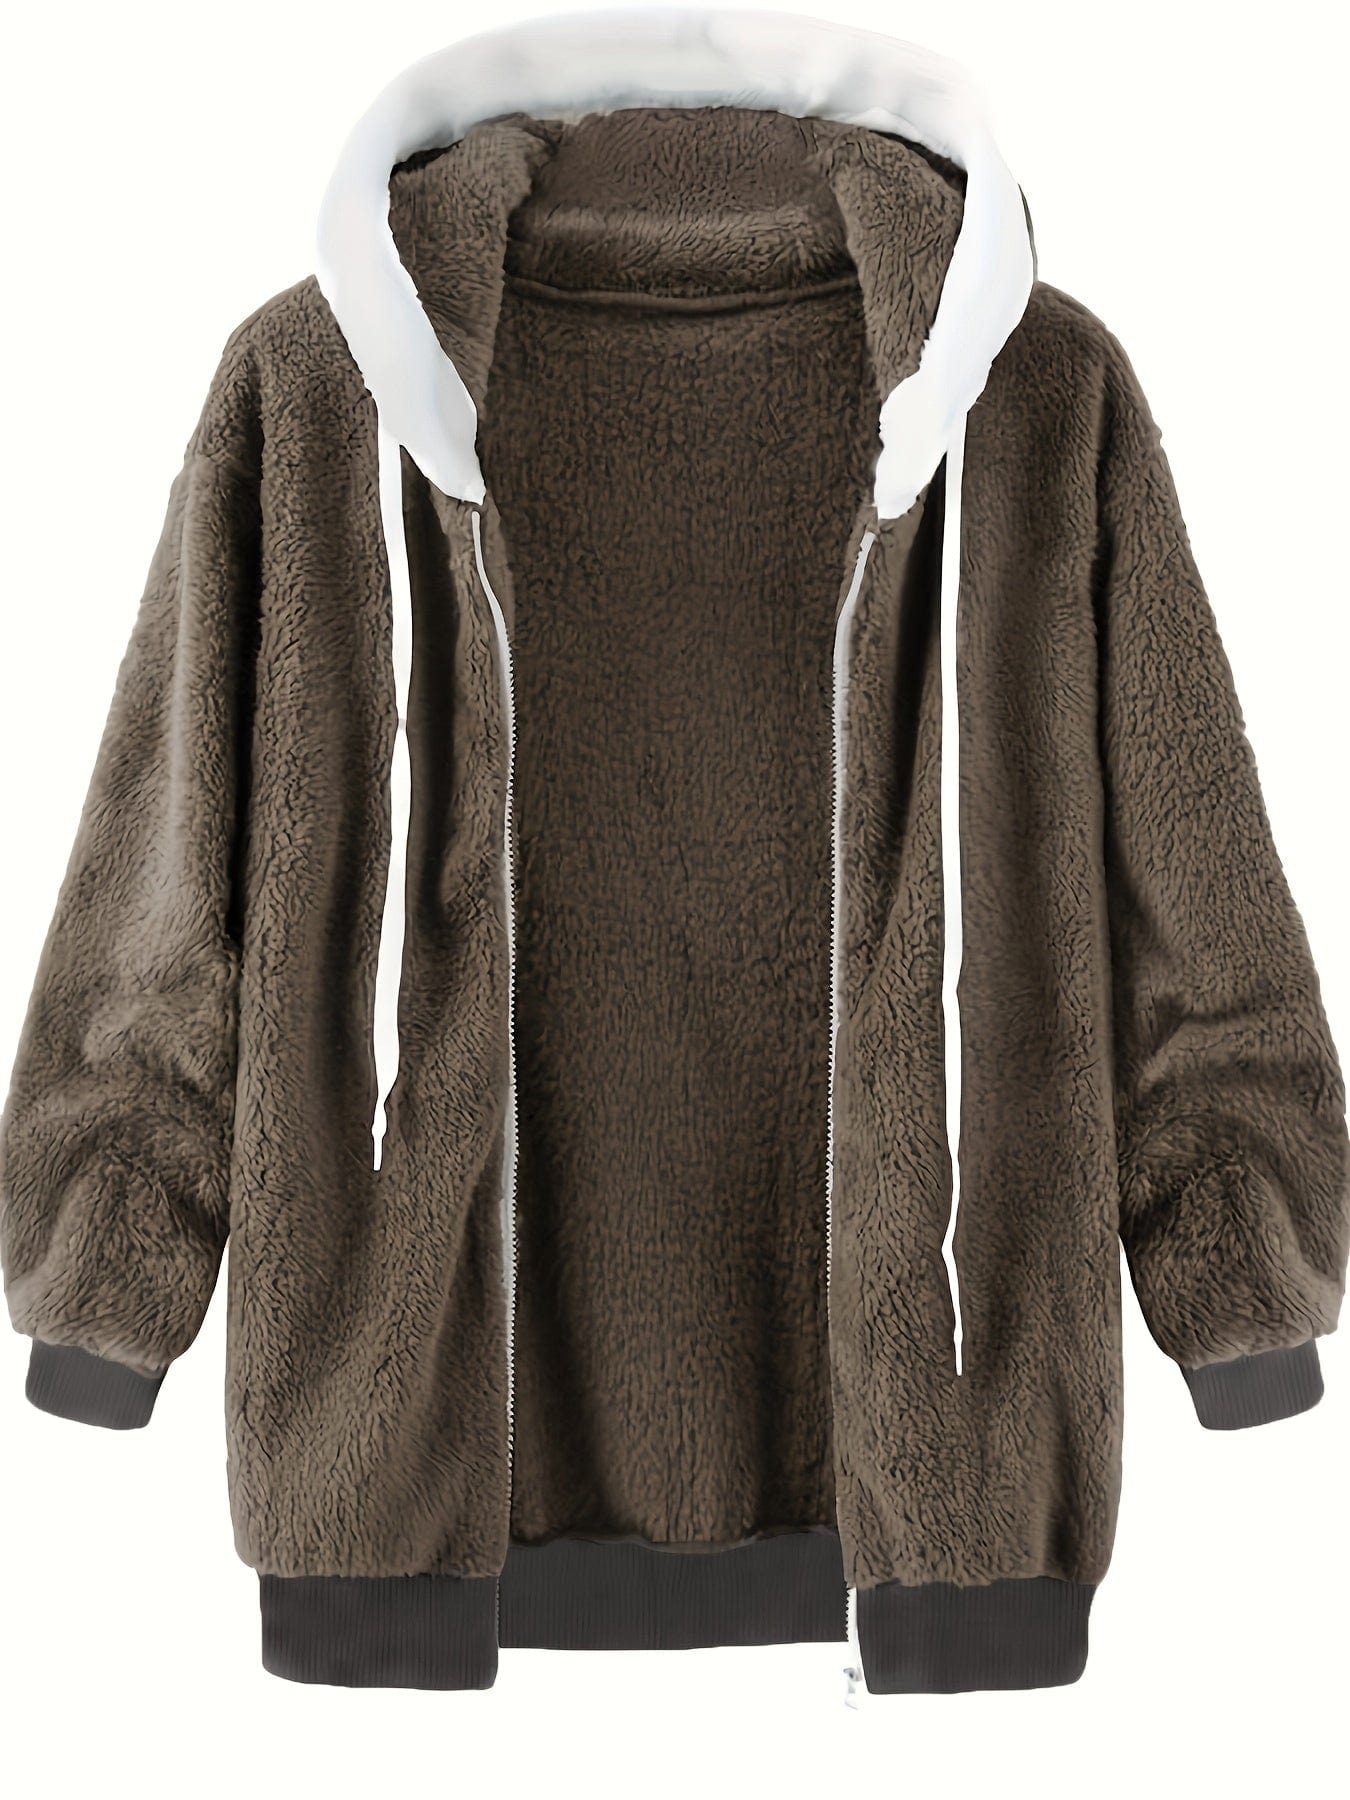 Plus Size Cute Coat, Women's Plus Colorblock Zip Up Long Sleeve Drawstring Hooded Teddy Coat